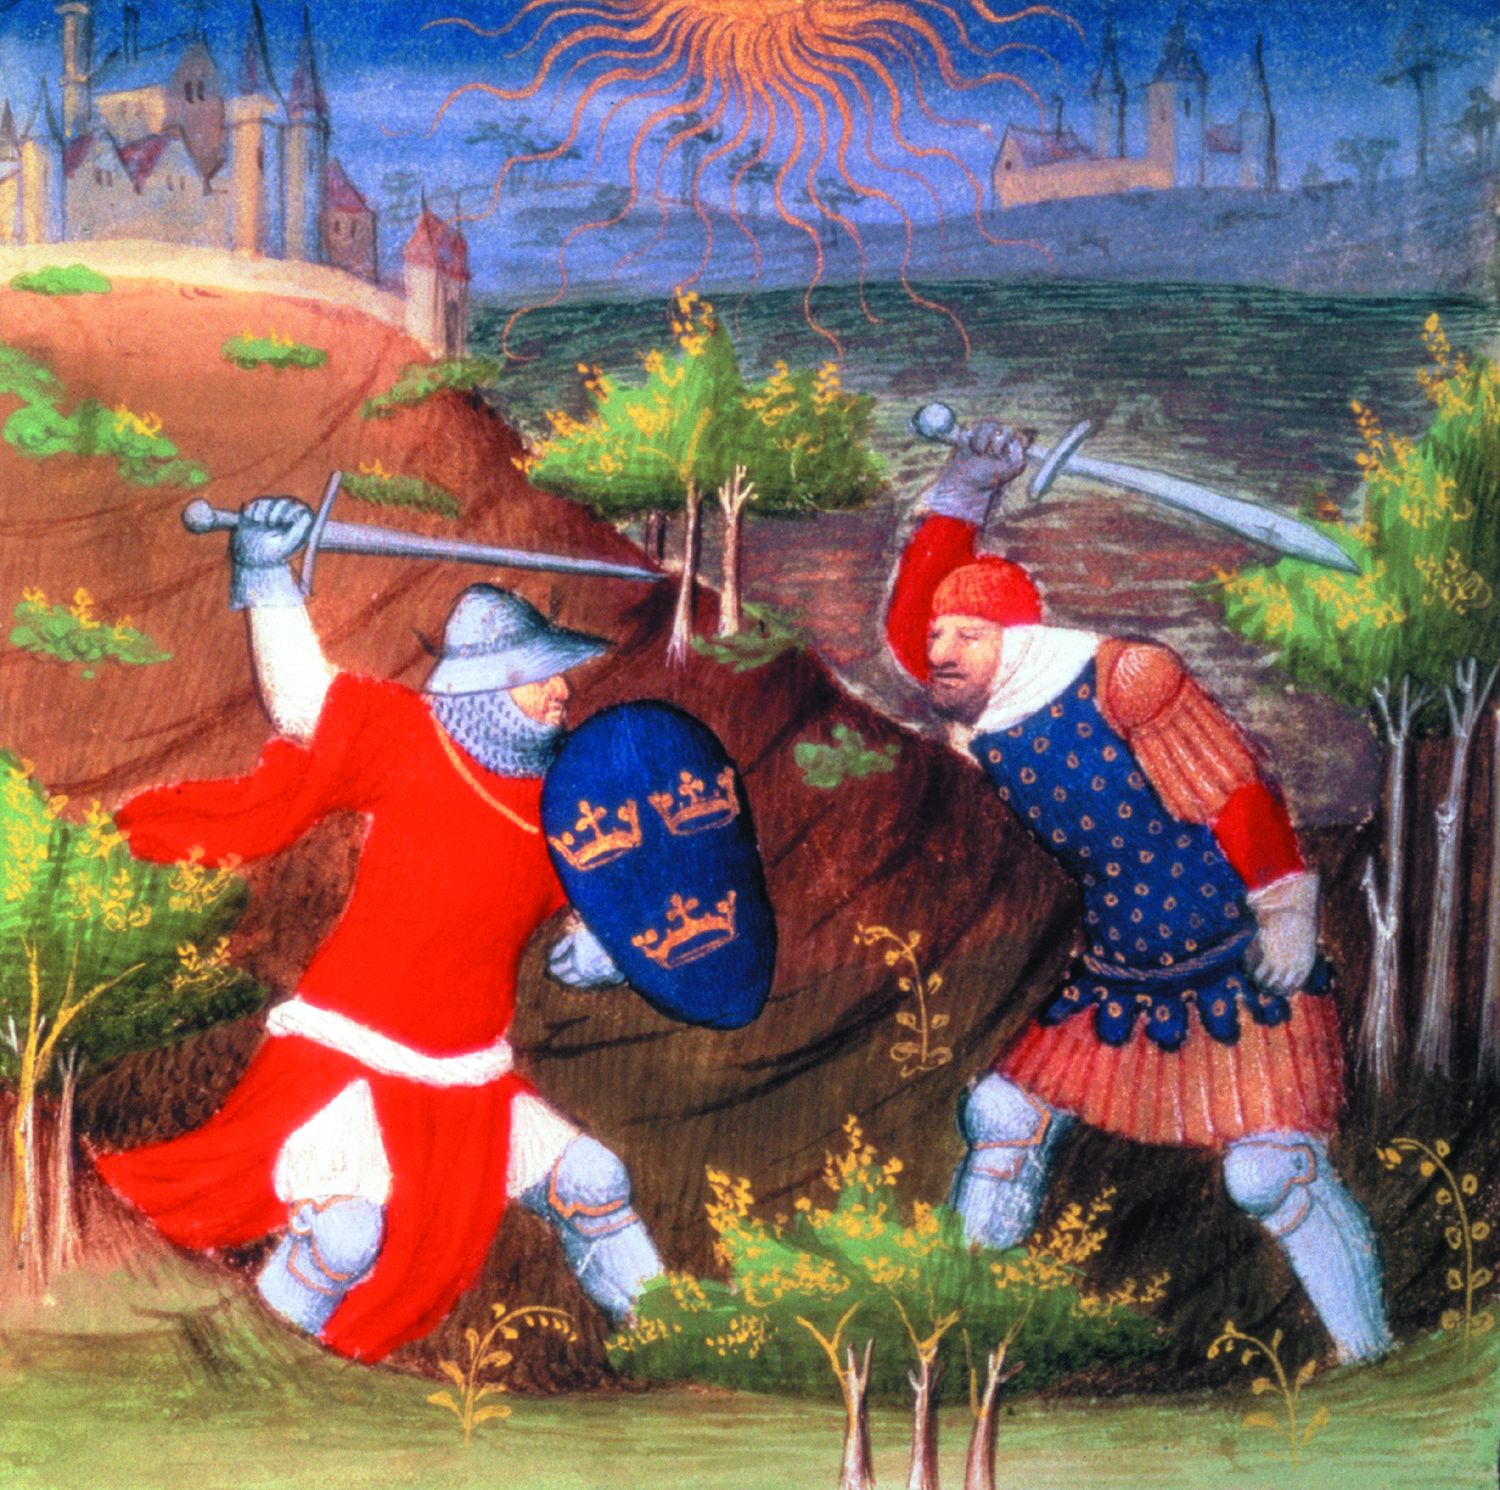 King Arthur and three knights slaying the heathen kings. The Fall of  Princes , abridged. England, S. E. (